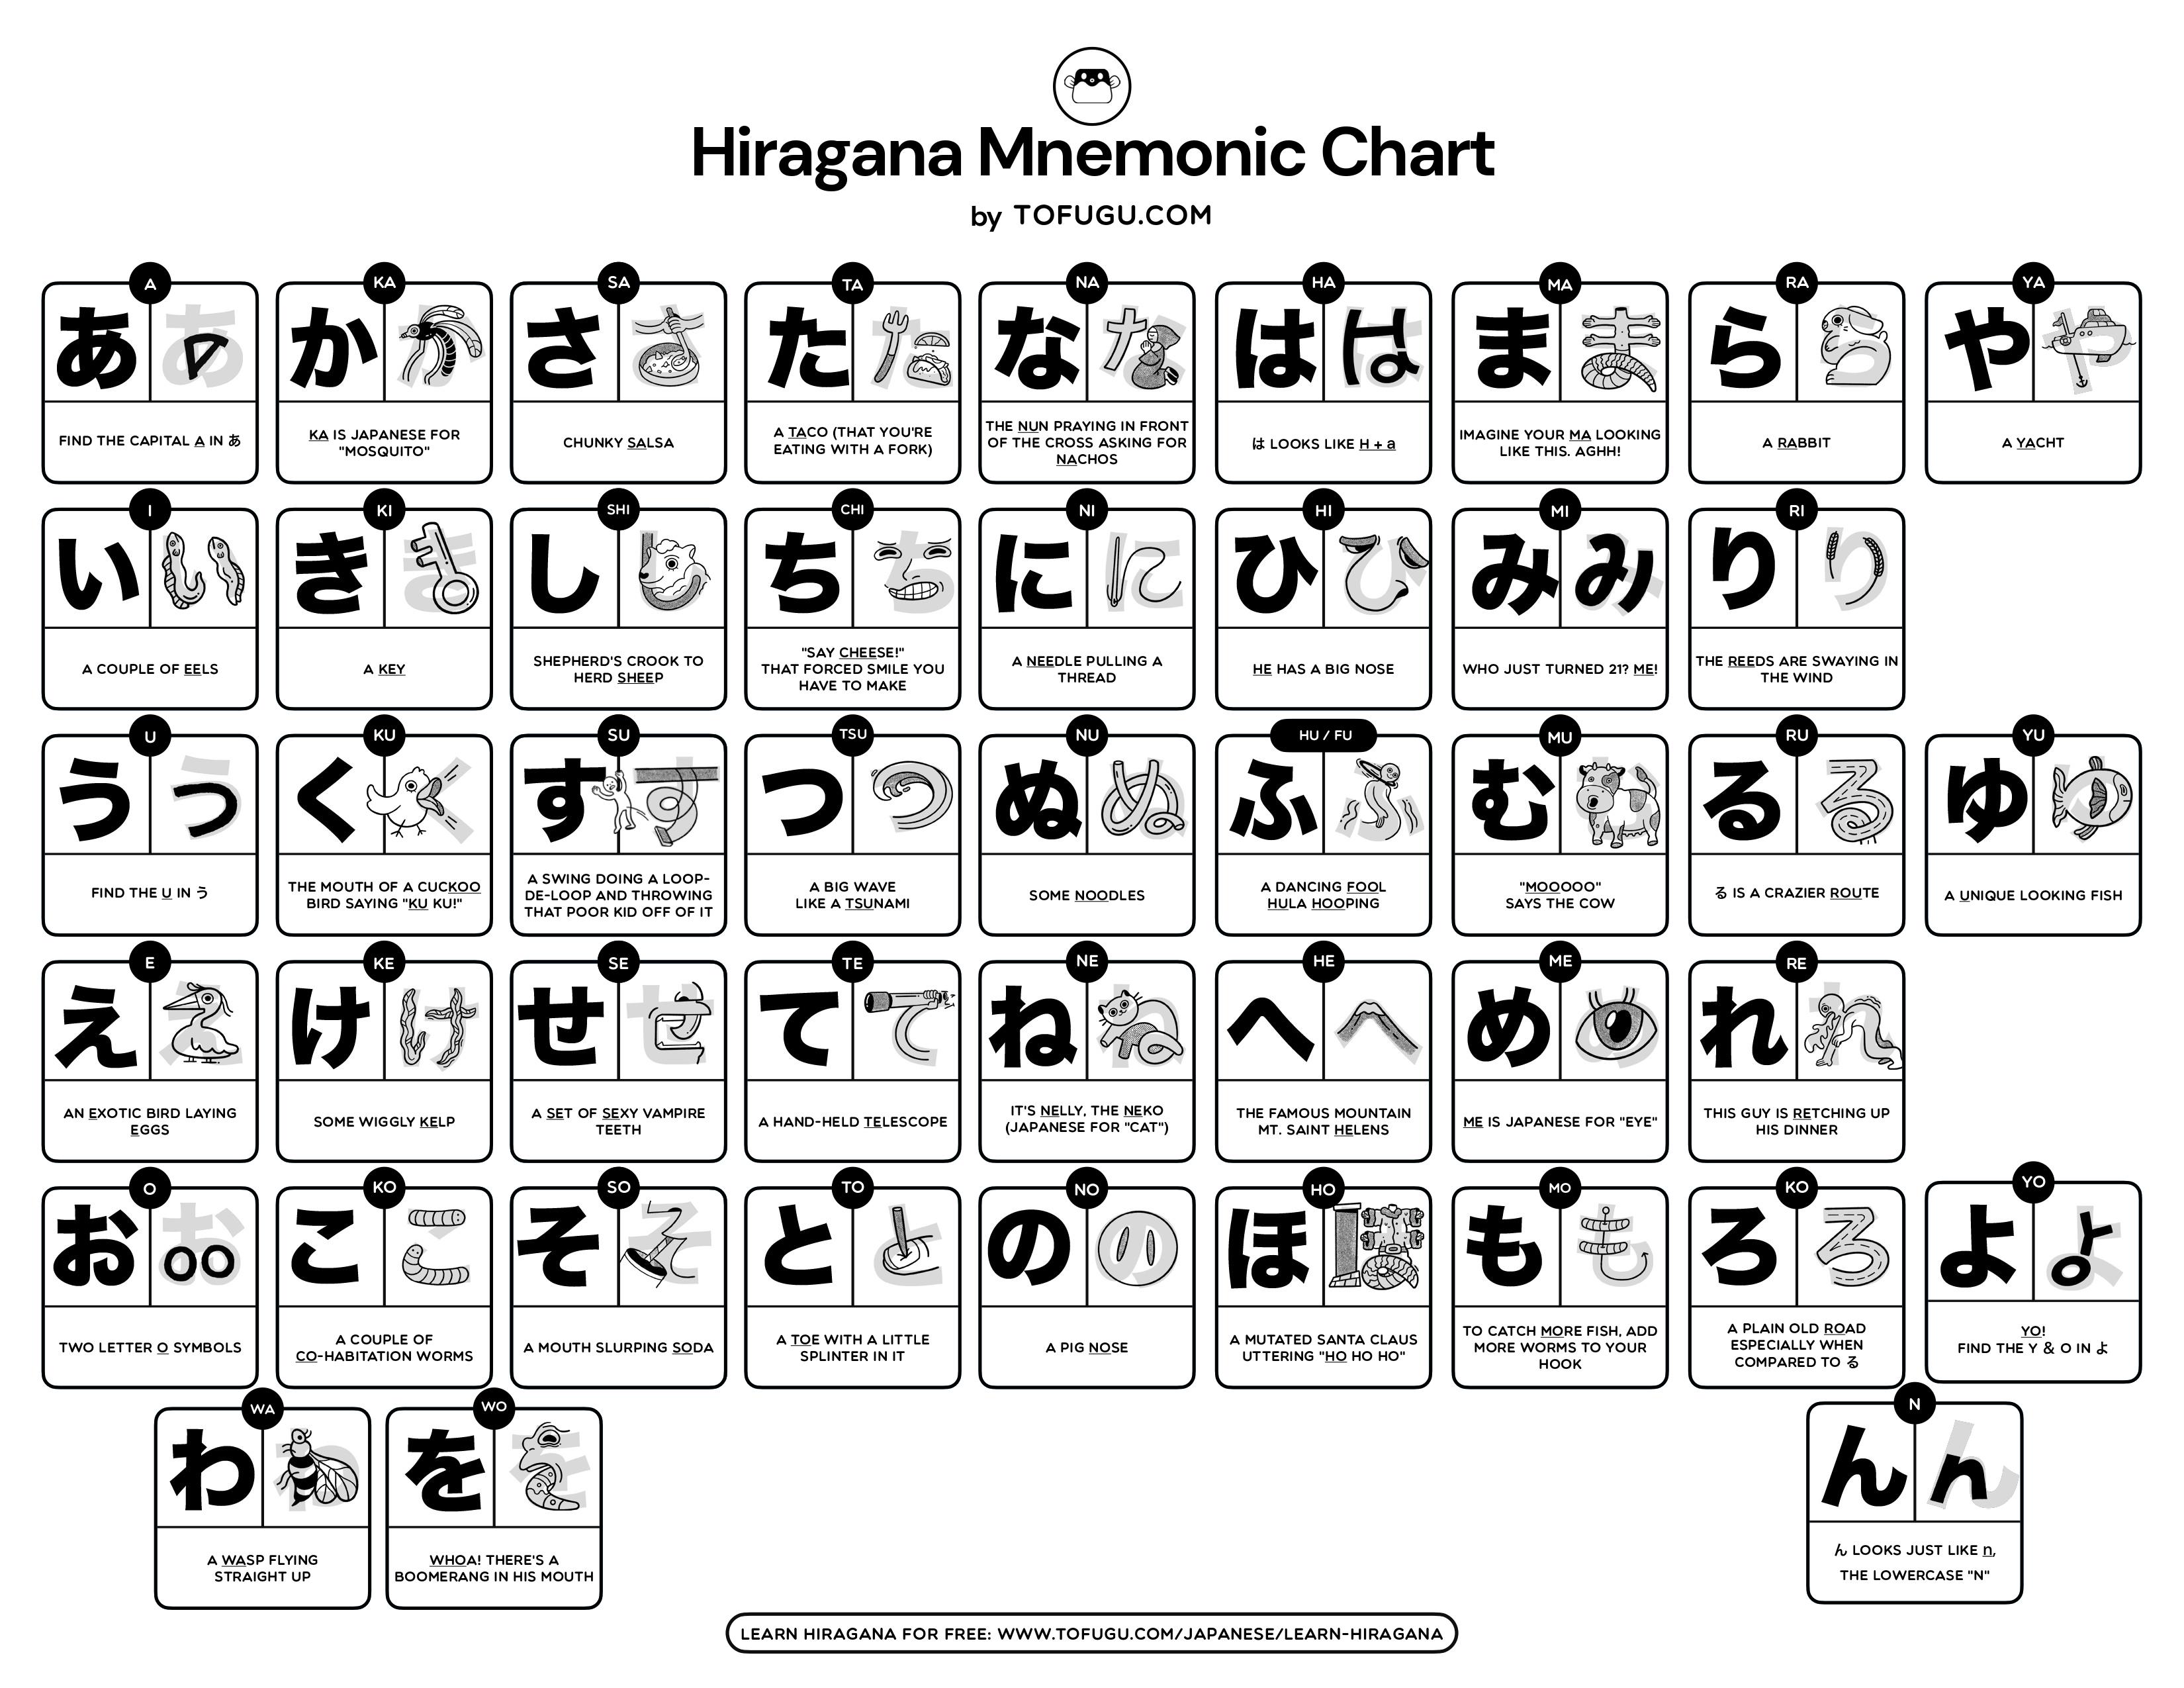 worksheets japanese alphabet